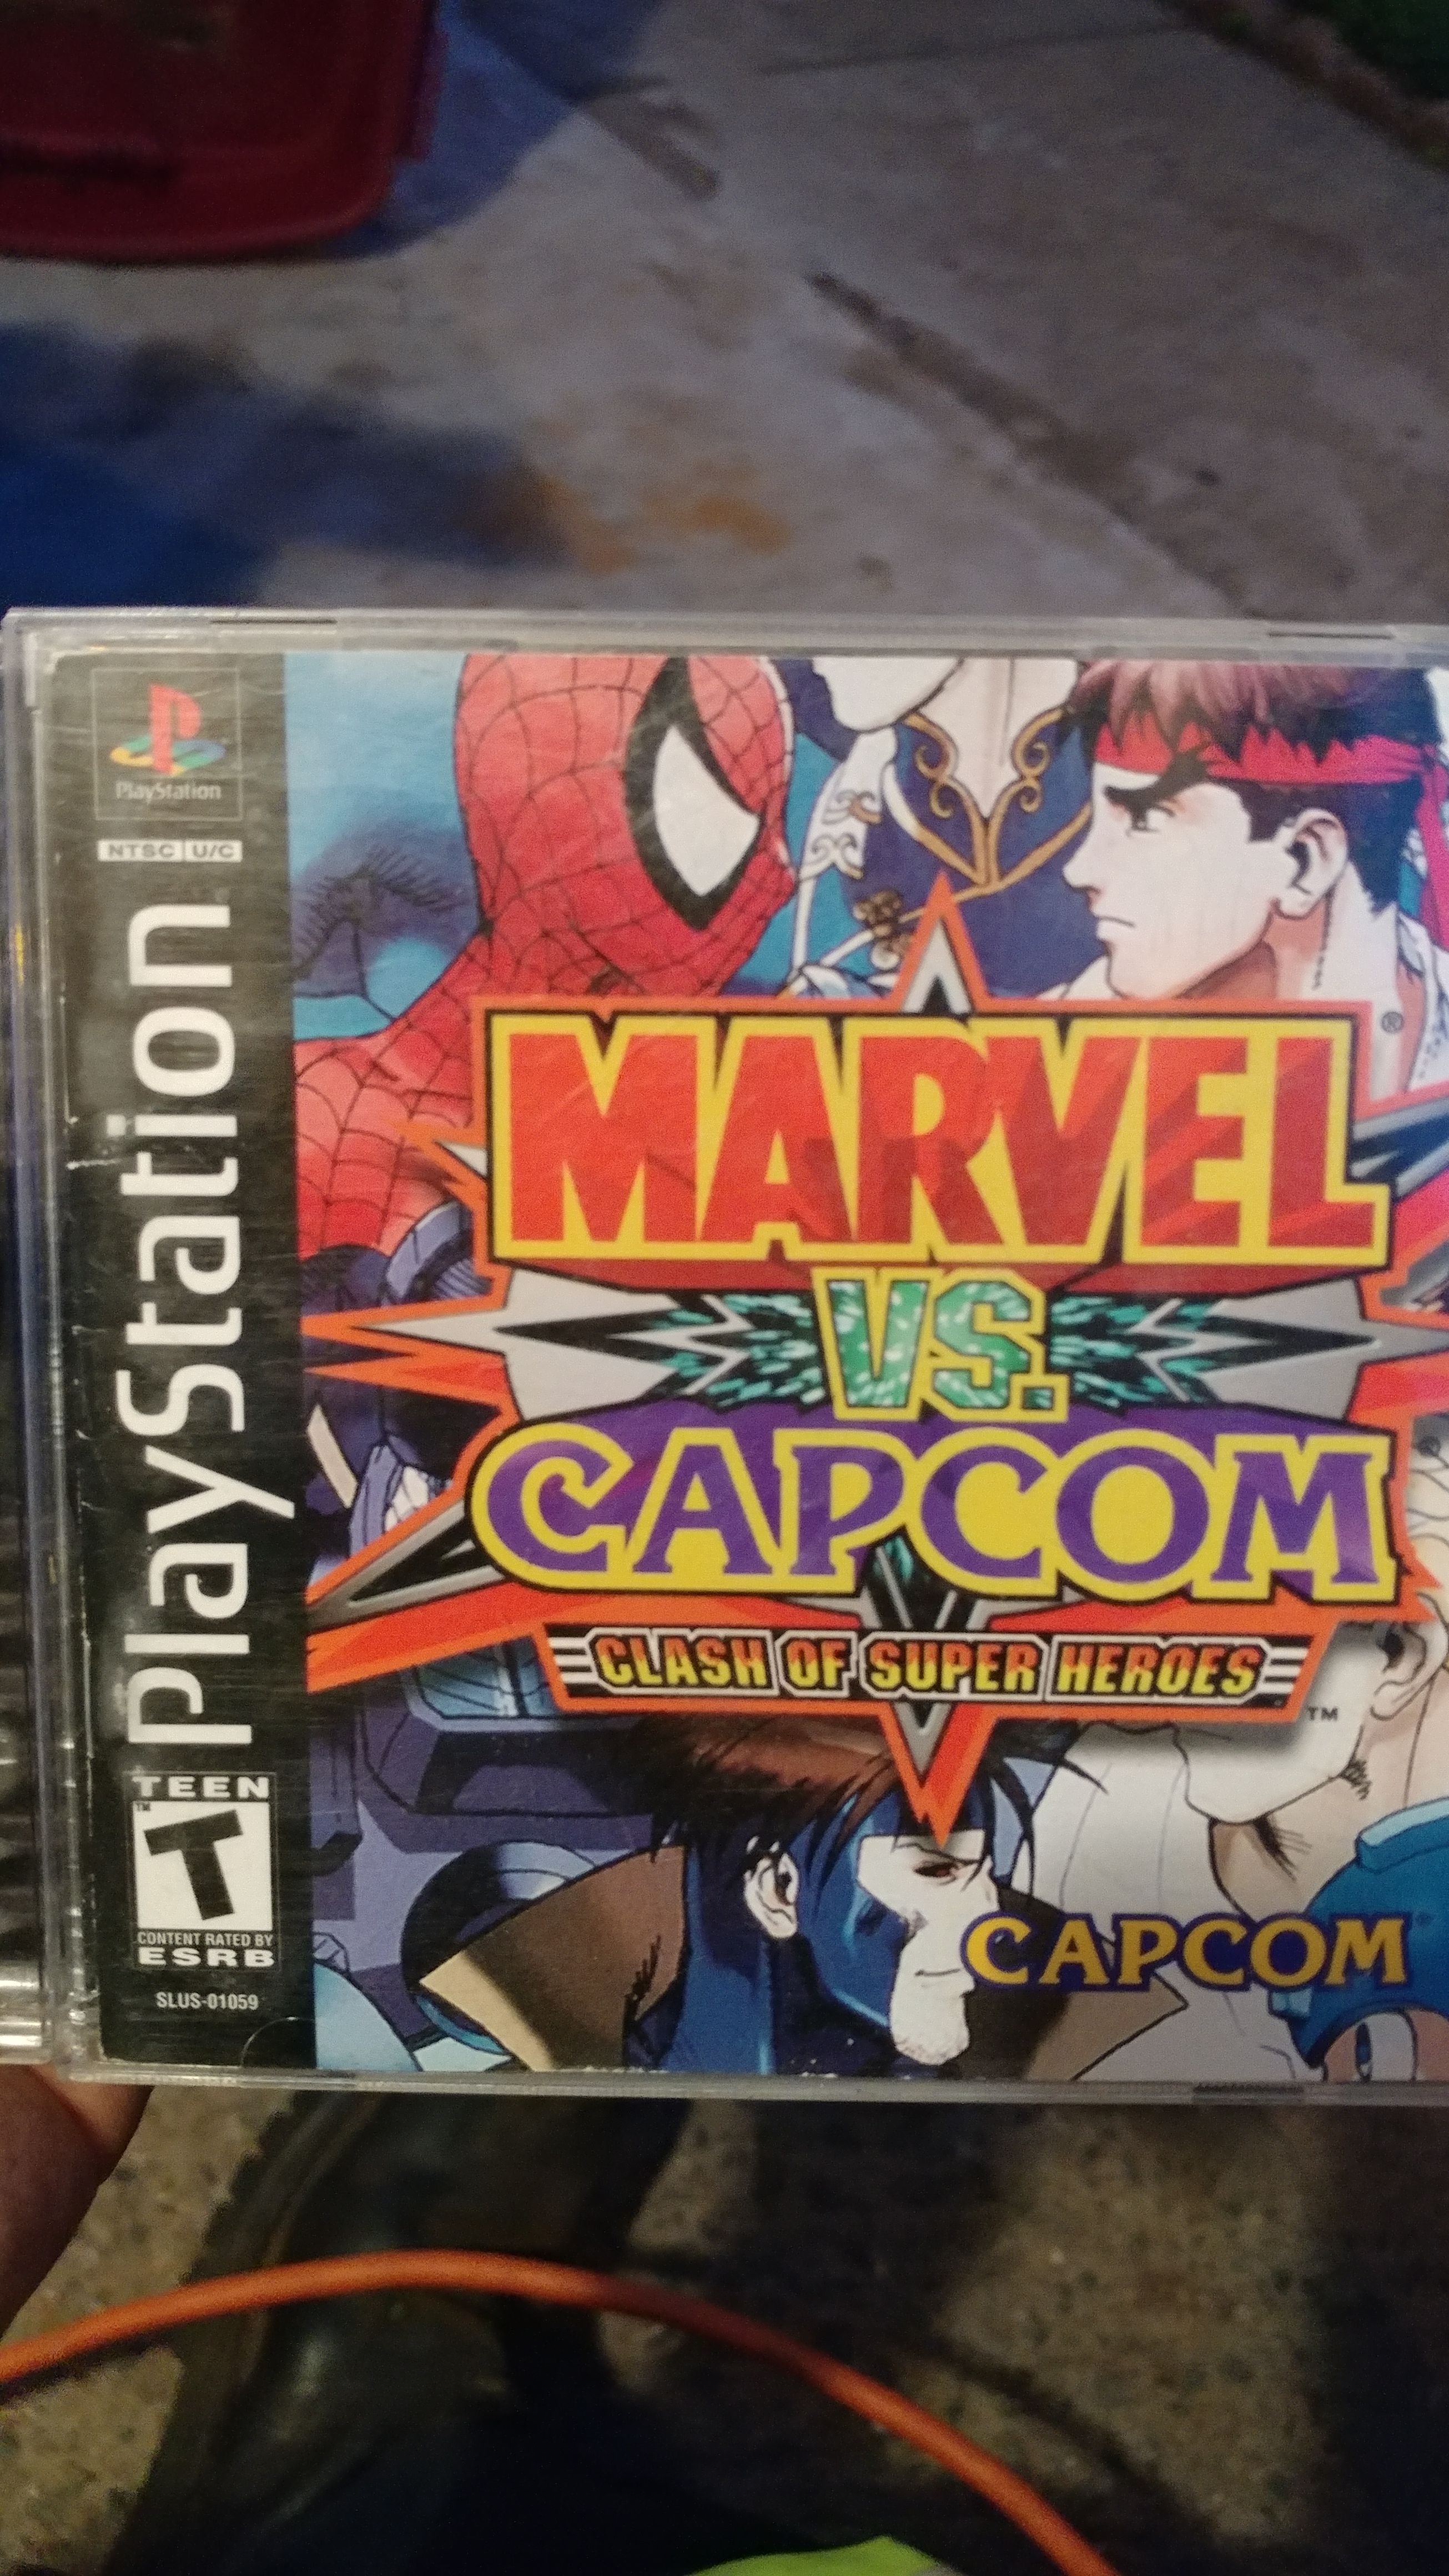 Marvel versus Capcom for PS1